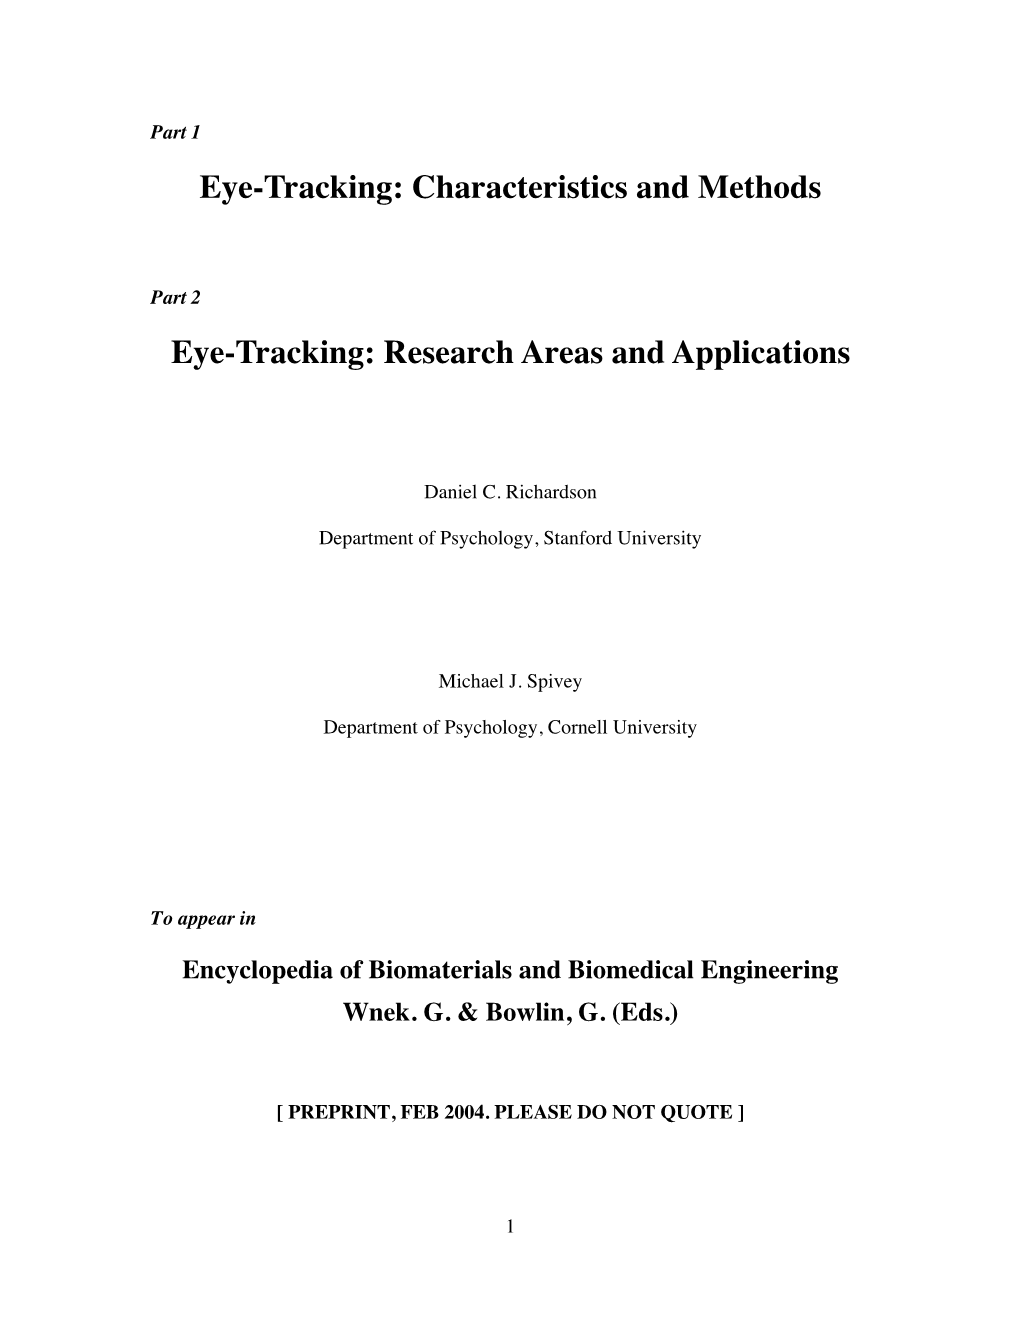 Eye-Tracking: Characteristics and Methods